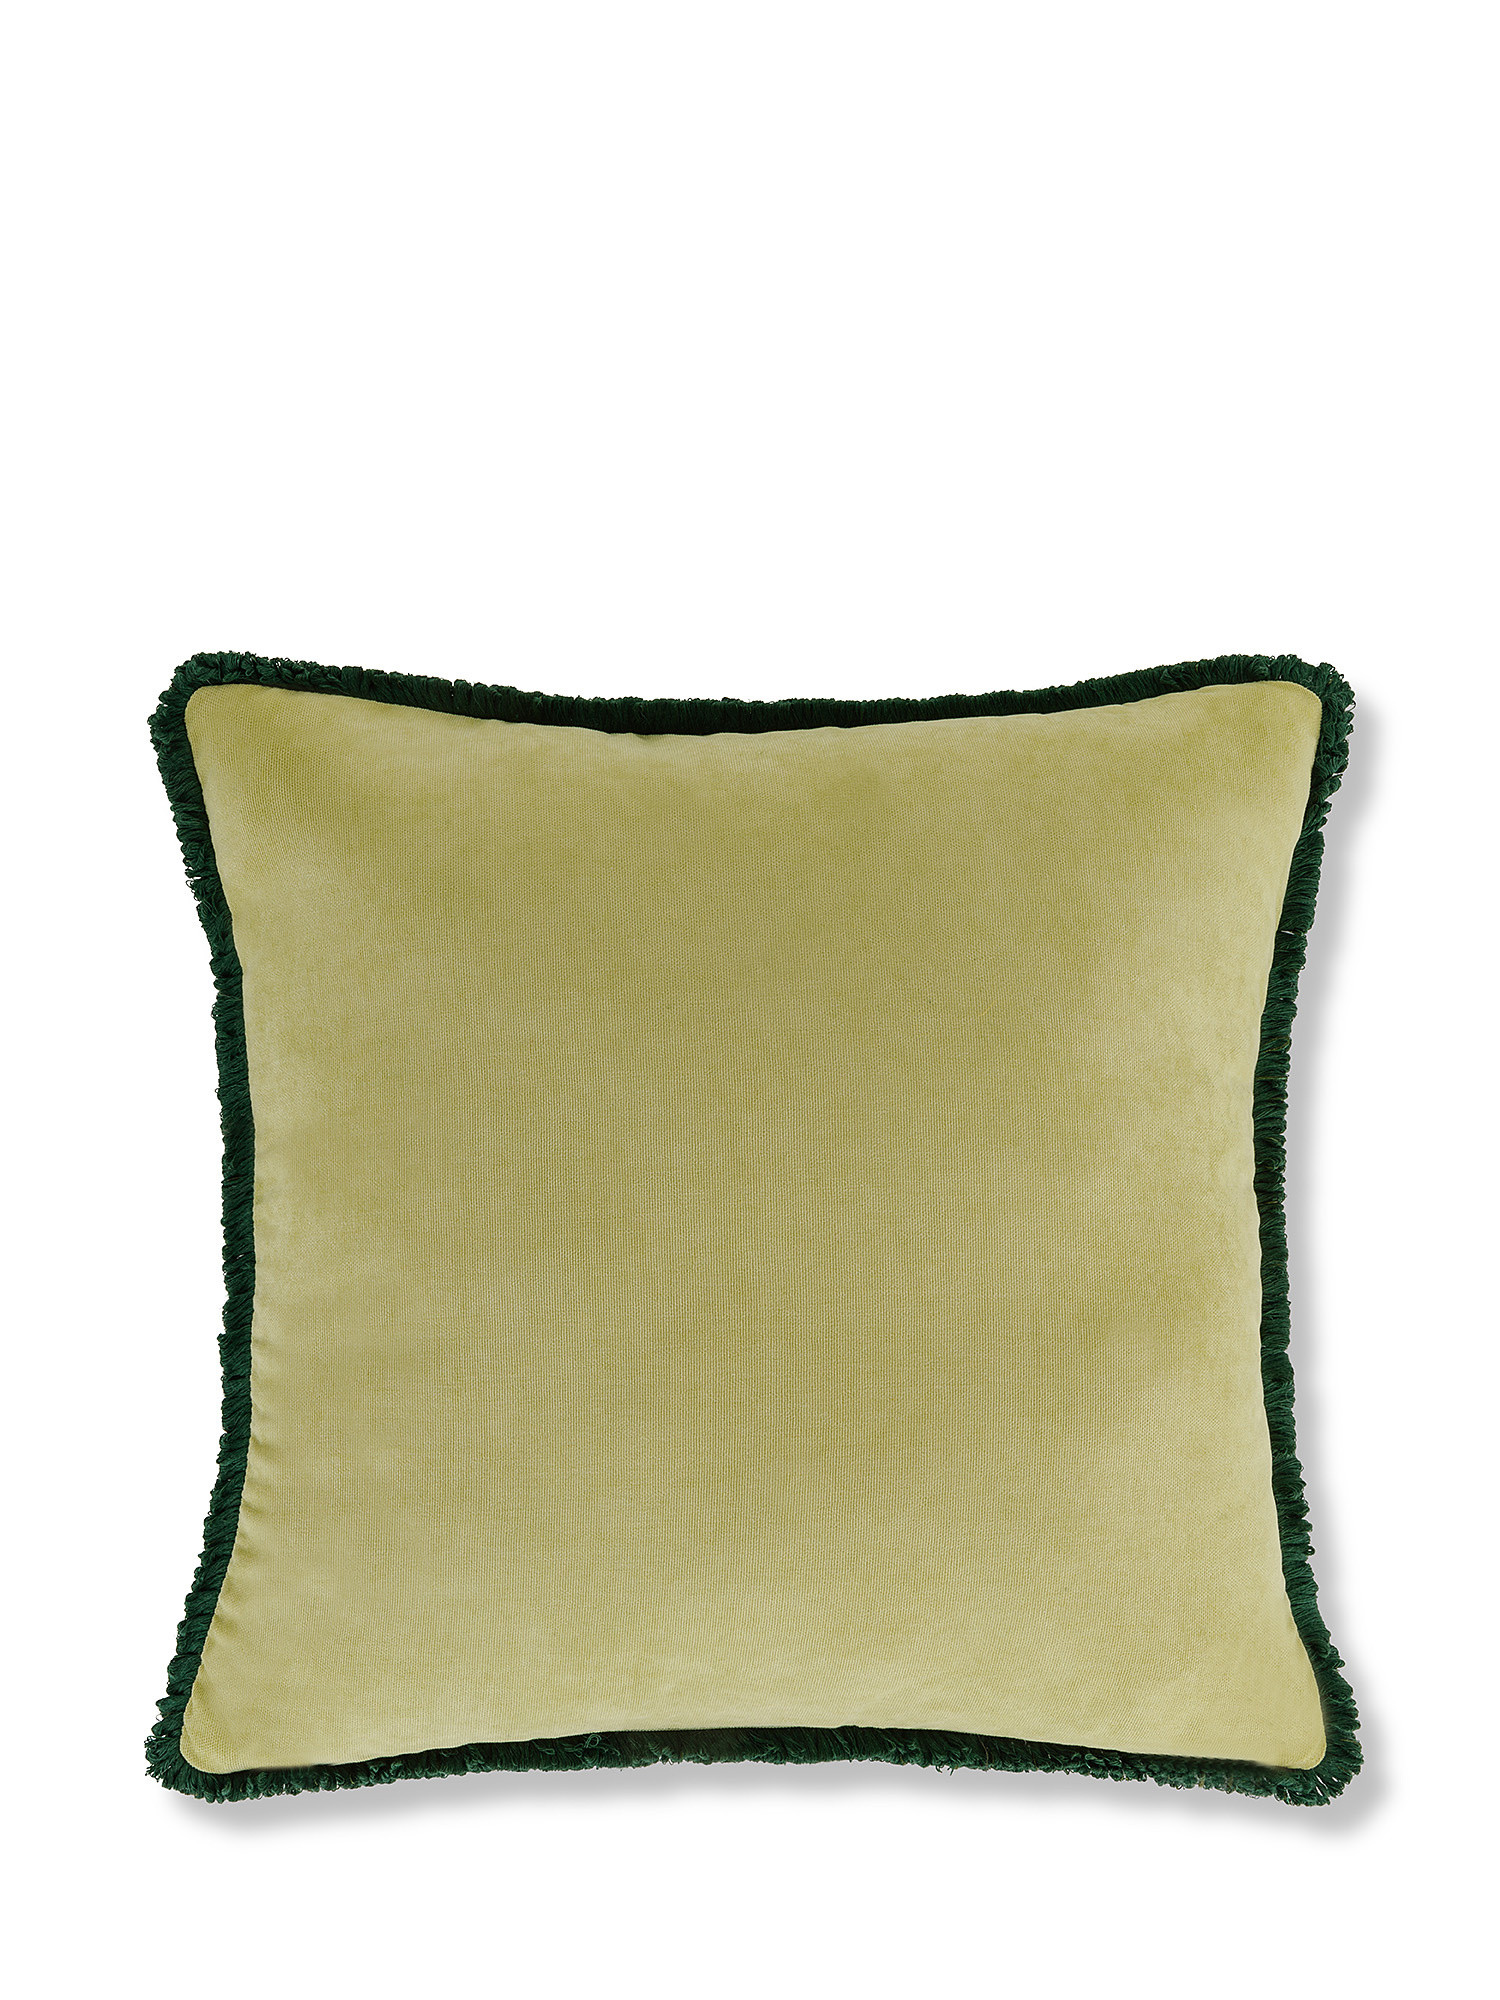 Flower print cushion 45x45cm, Green, large image number 2